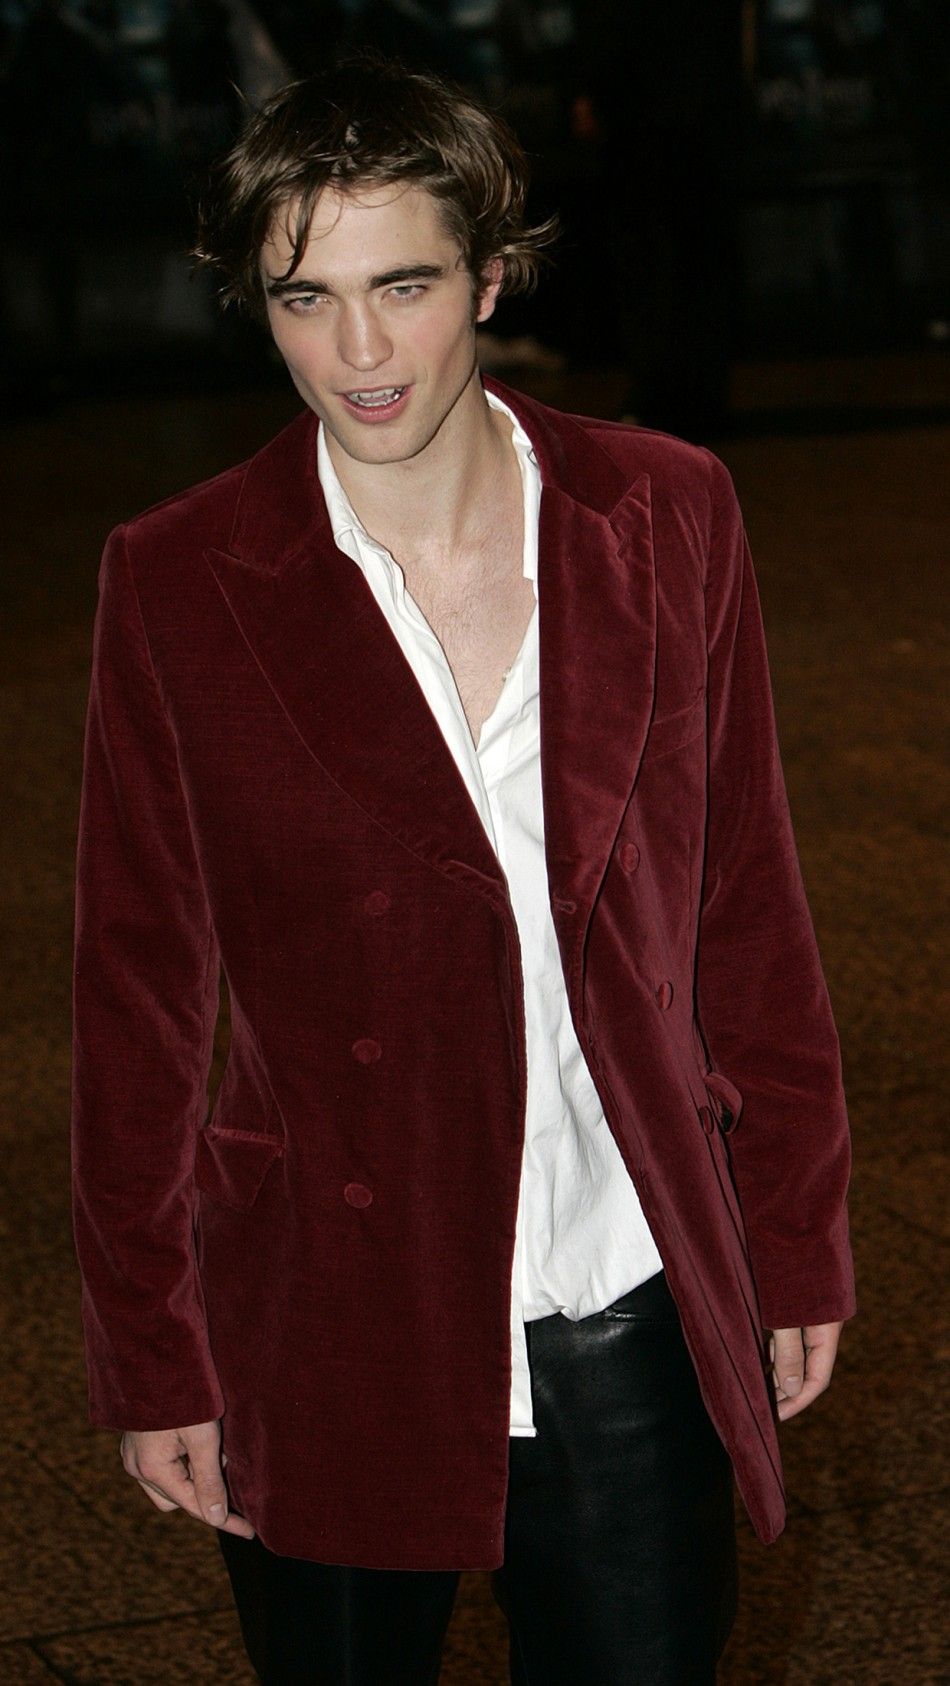 Robert Pattinson in 2005